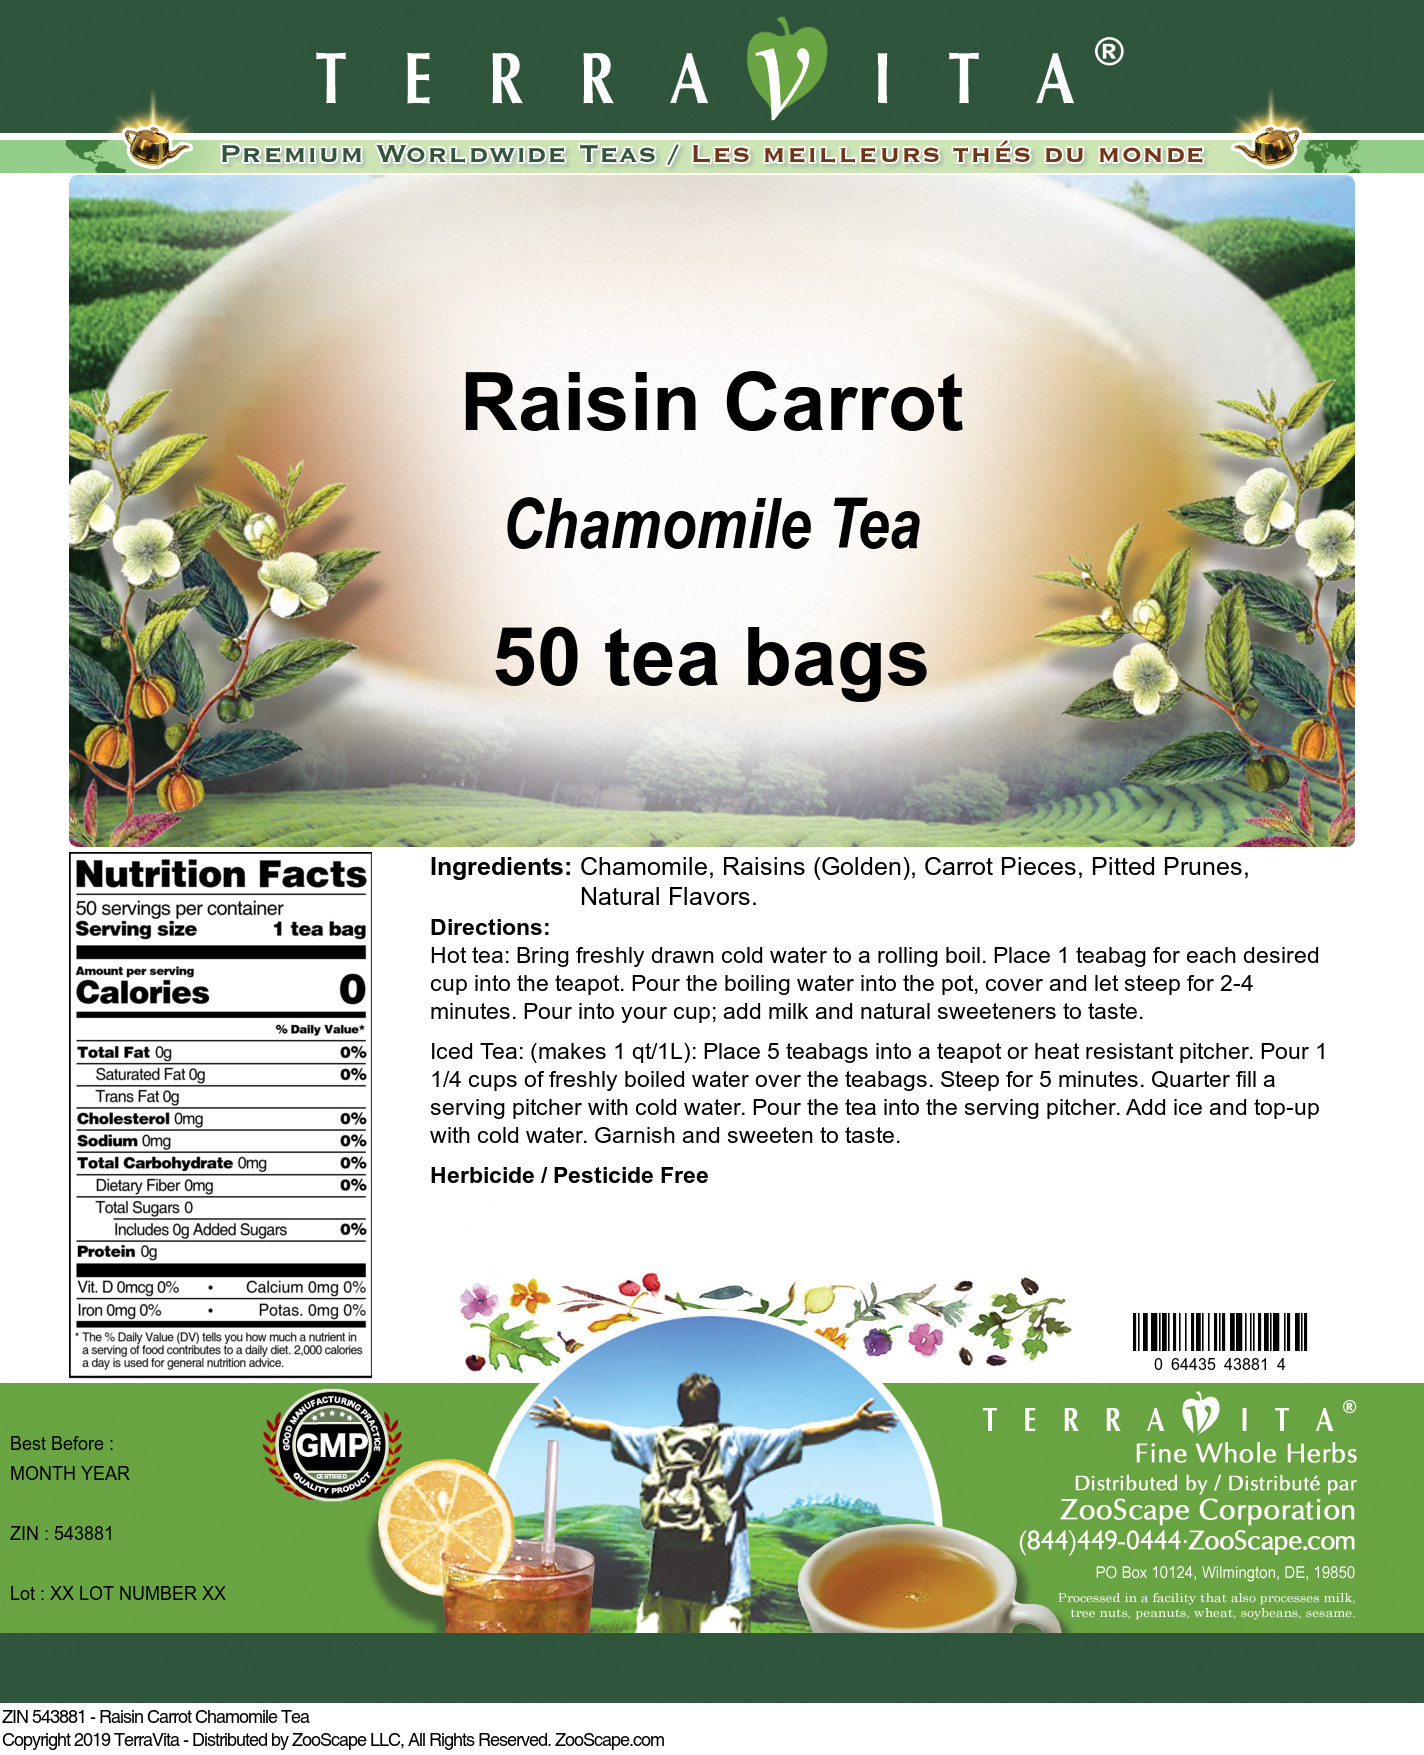 Raisin Carrot Chamomile Tea - Label